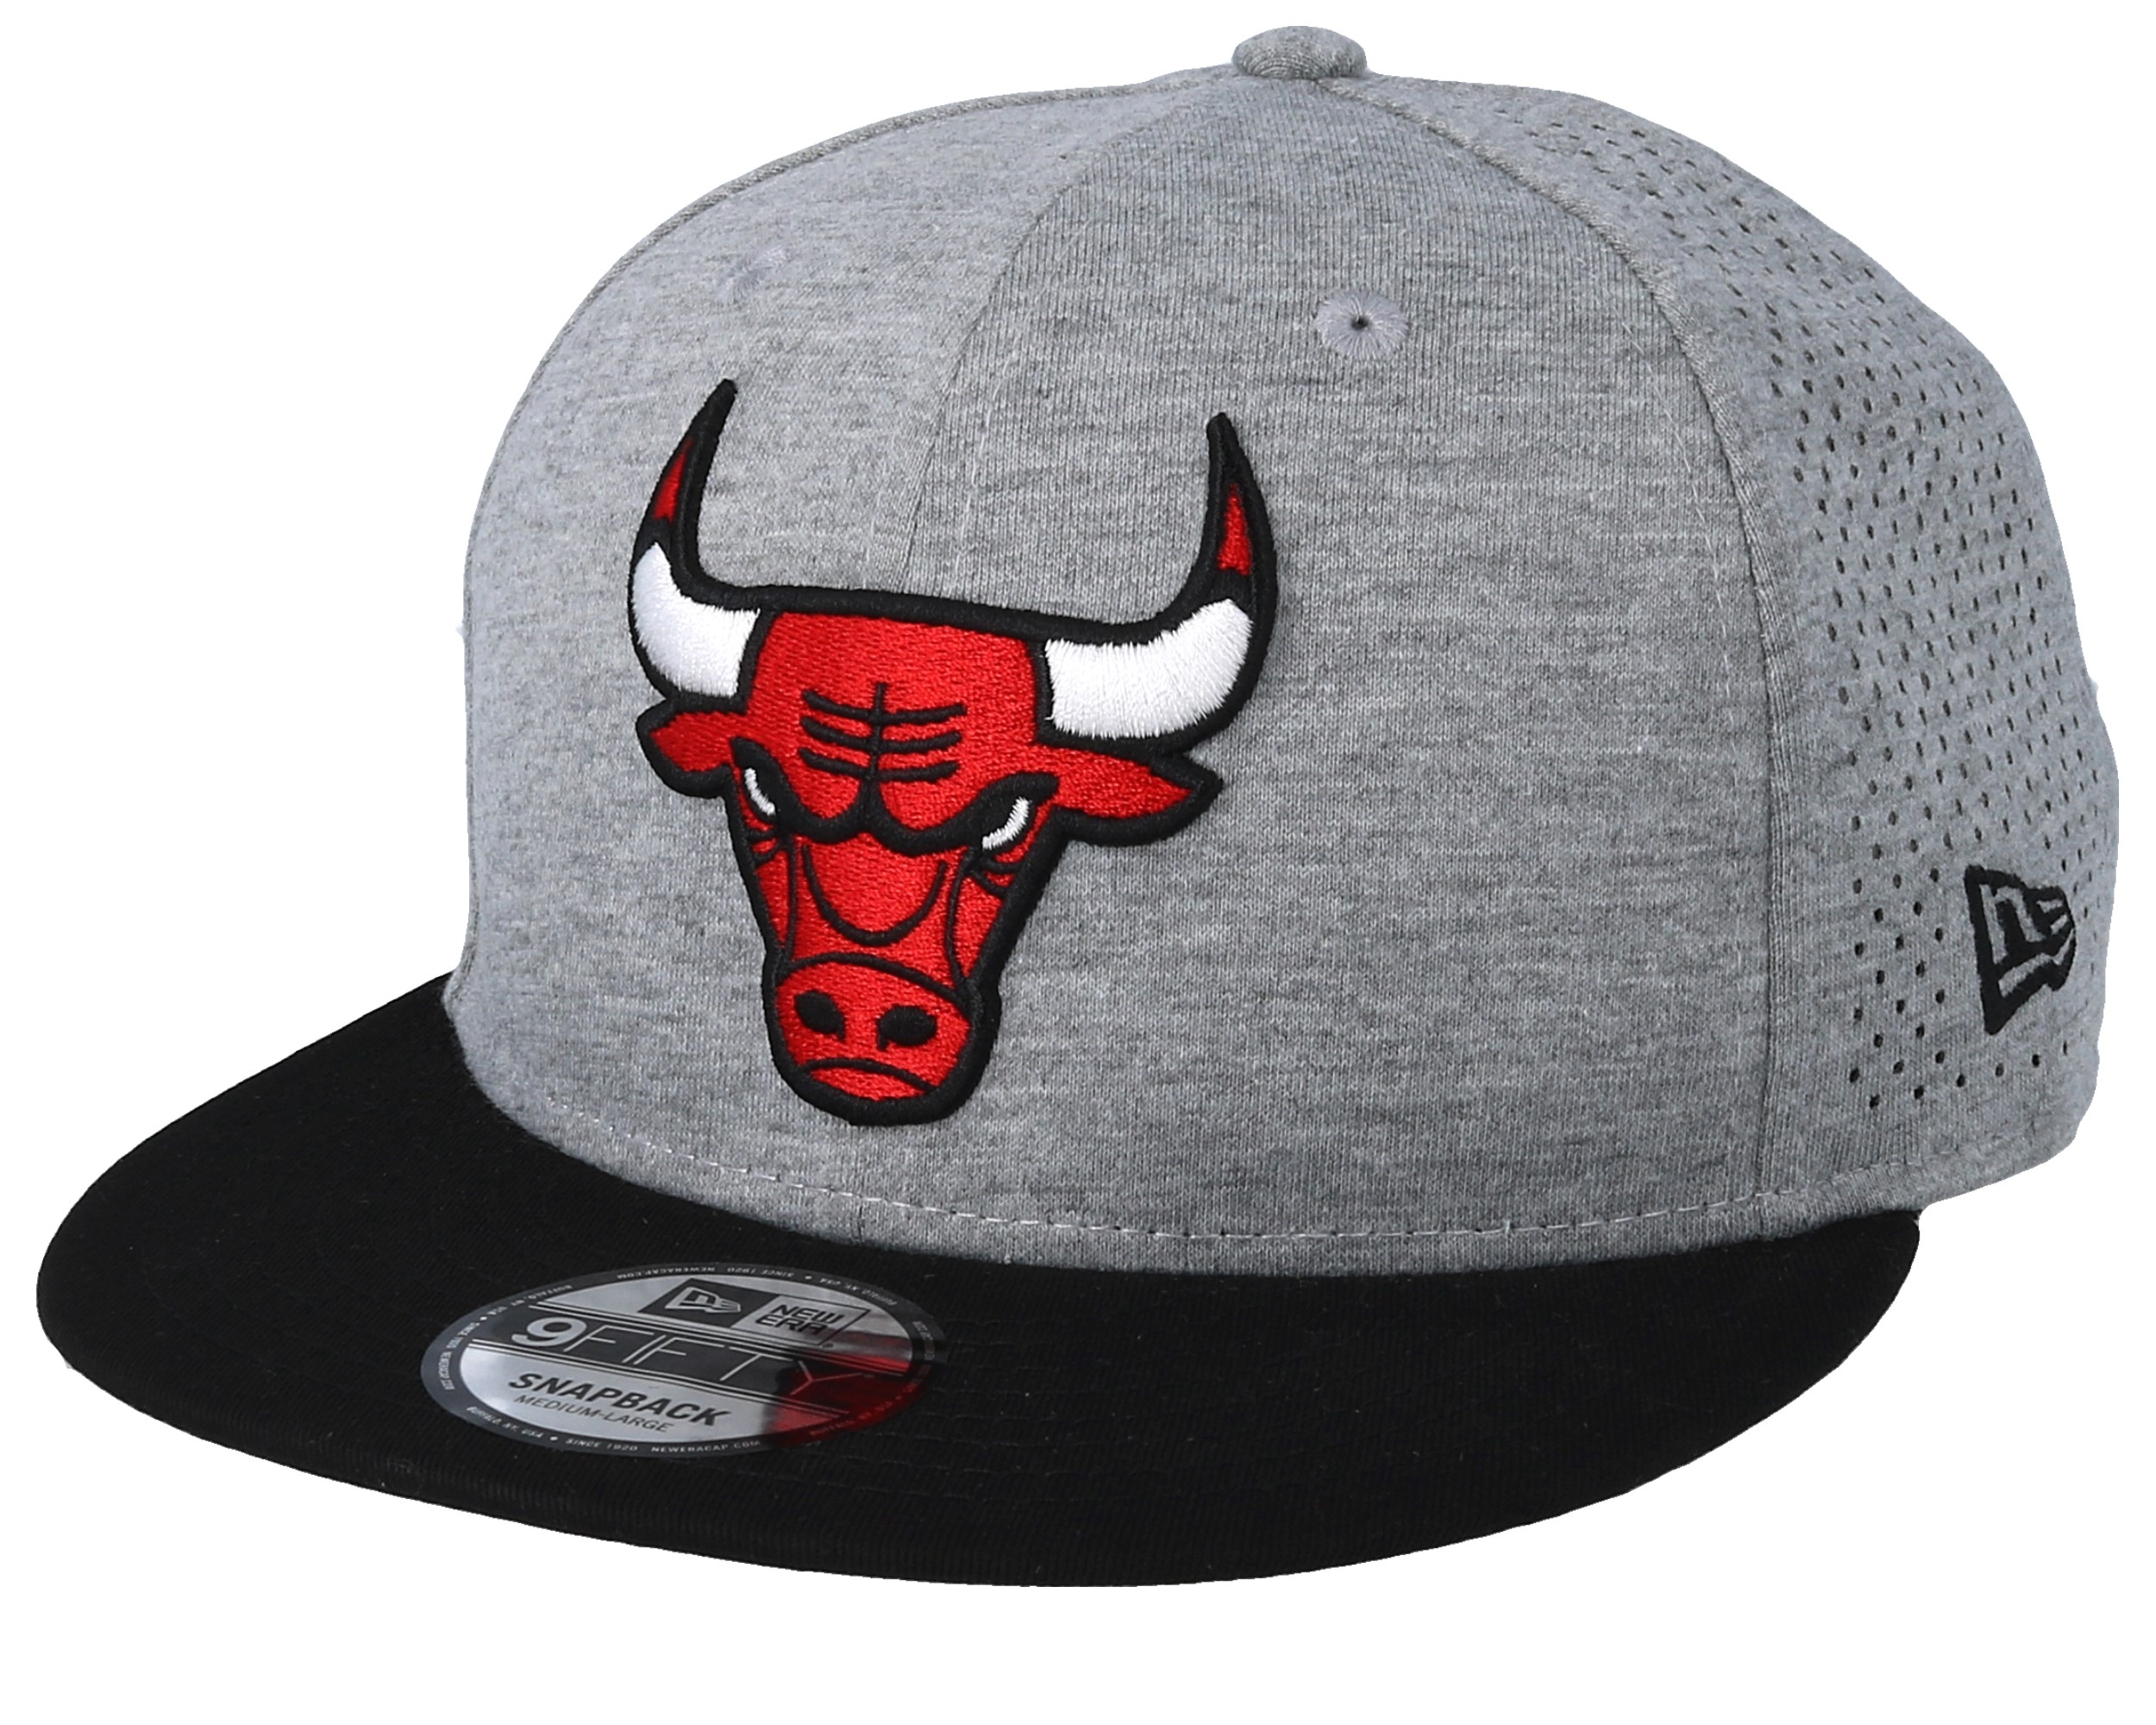 Chicago Bulls Shadow Turn Adjustable Hat Grey/Black